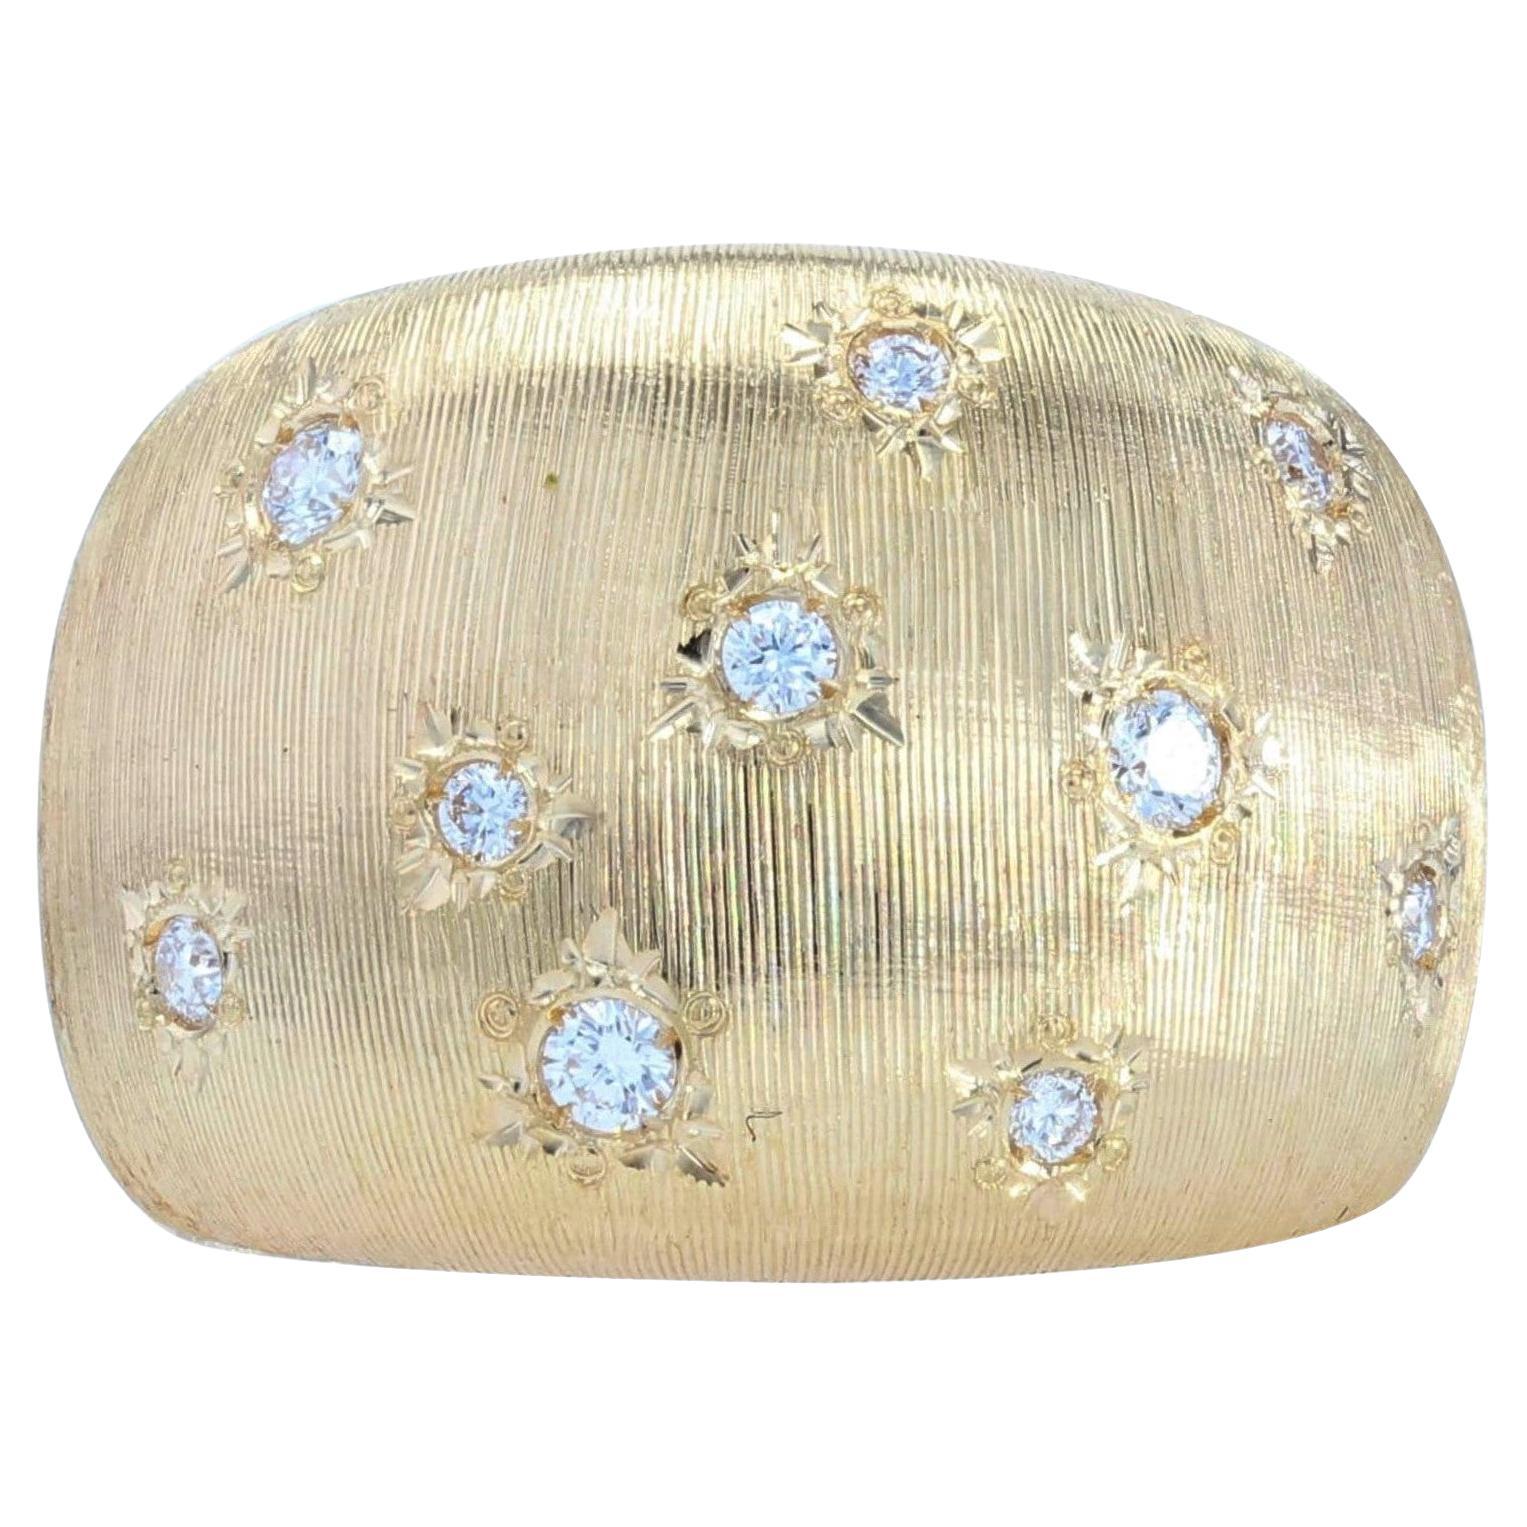 Moderner Diamanten-Armreif aus 18 Karat Gelbgold mit Satin-Finish